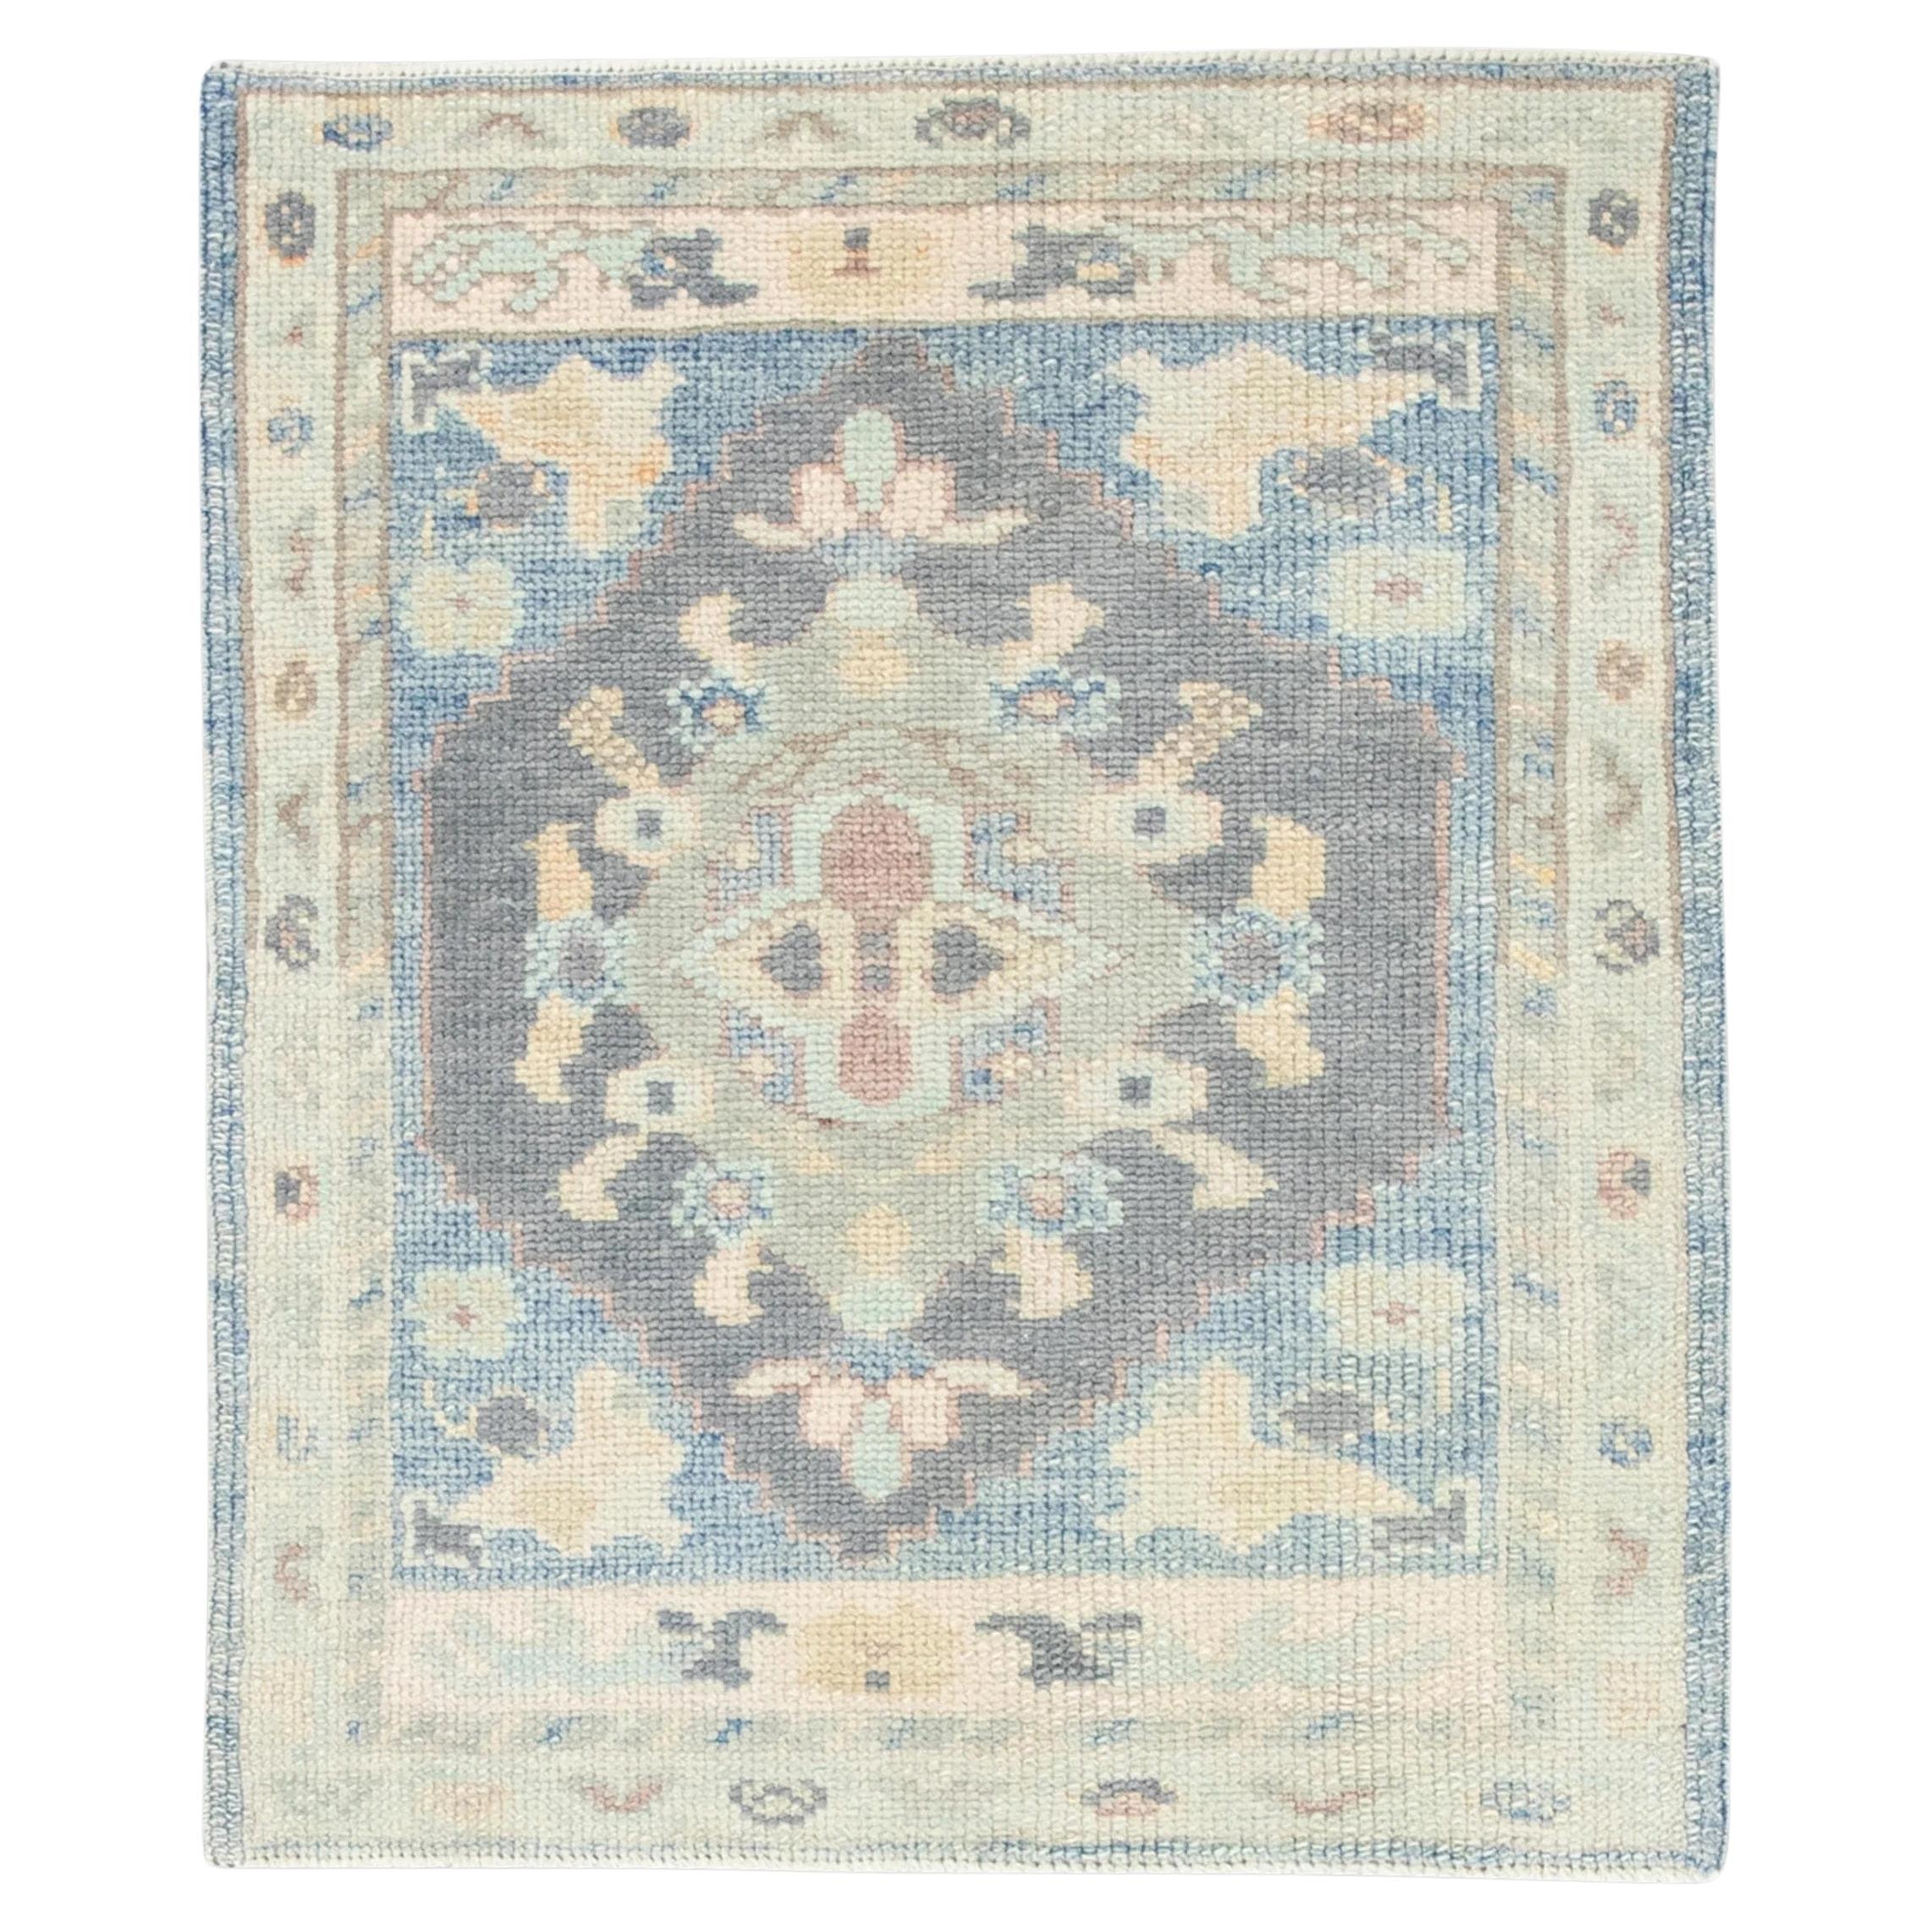 Blue Multicolor Floral Handwoven Wool Turkish Oushak Rug 2'4" x 2'9"